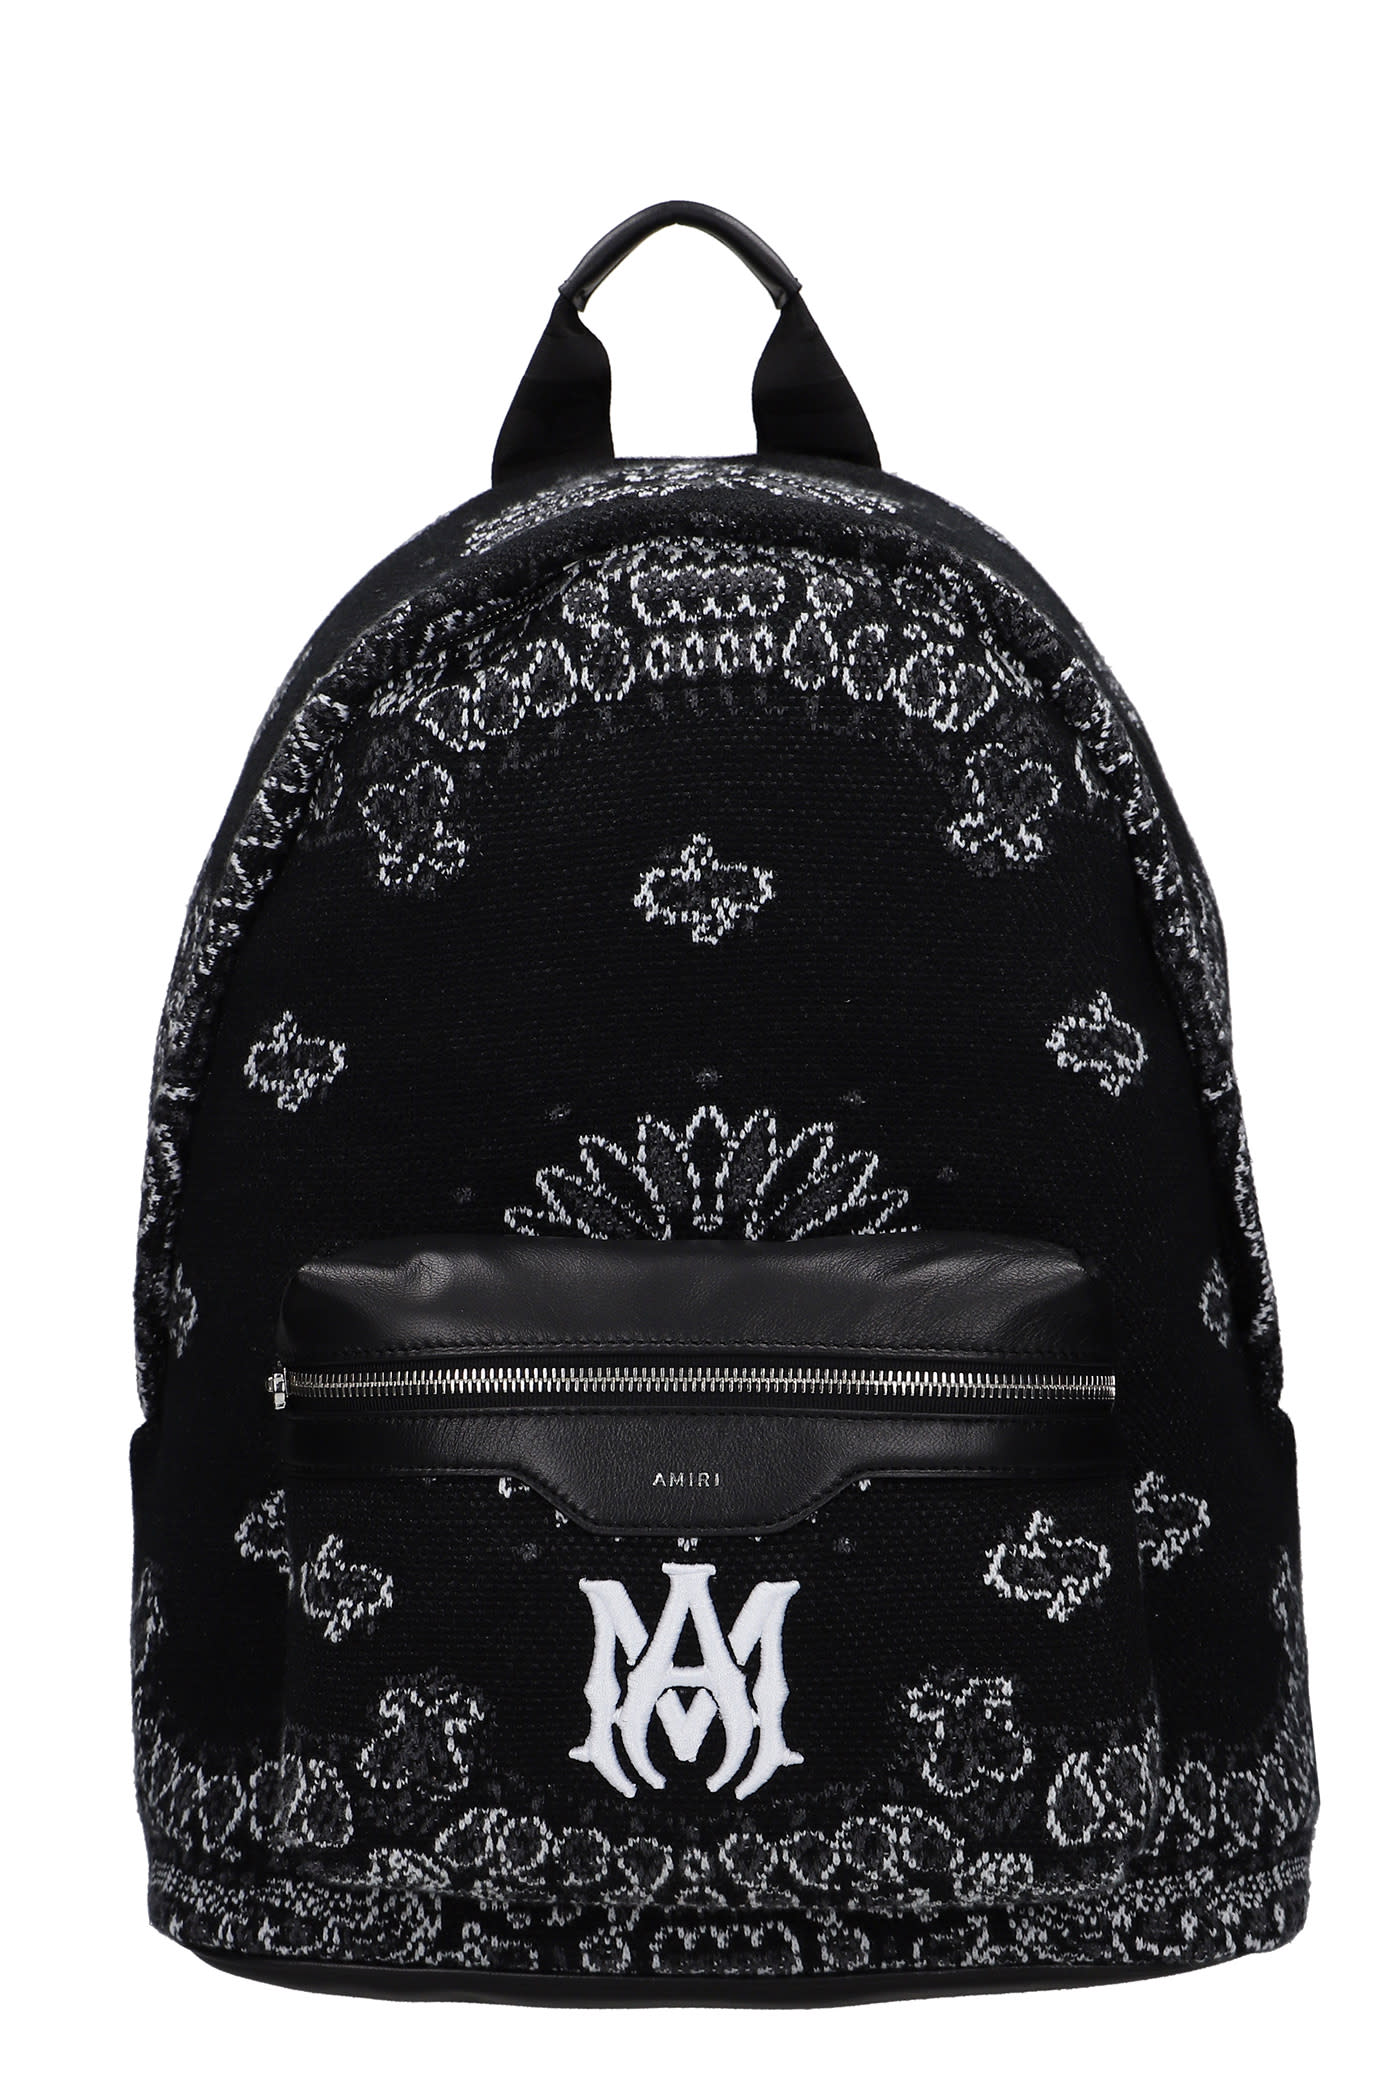 AMIRI Backpack In Black Cotton